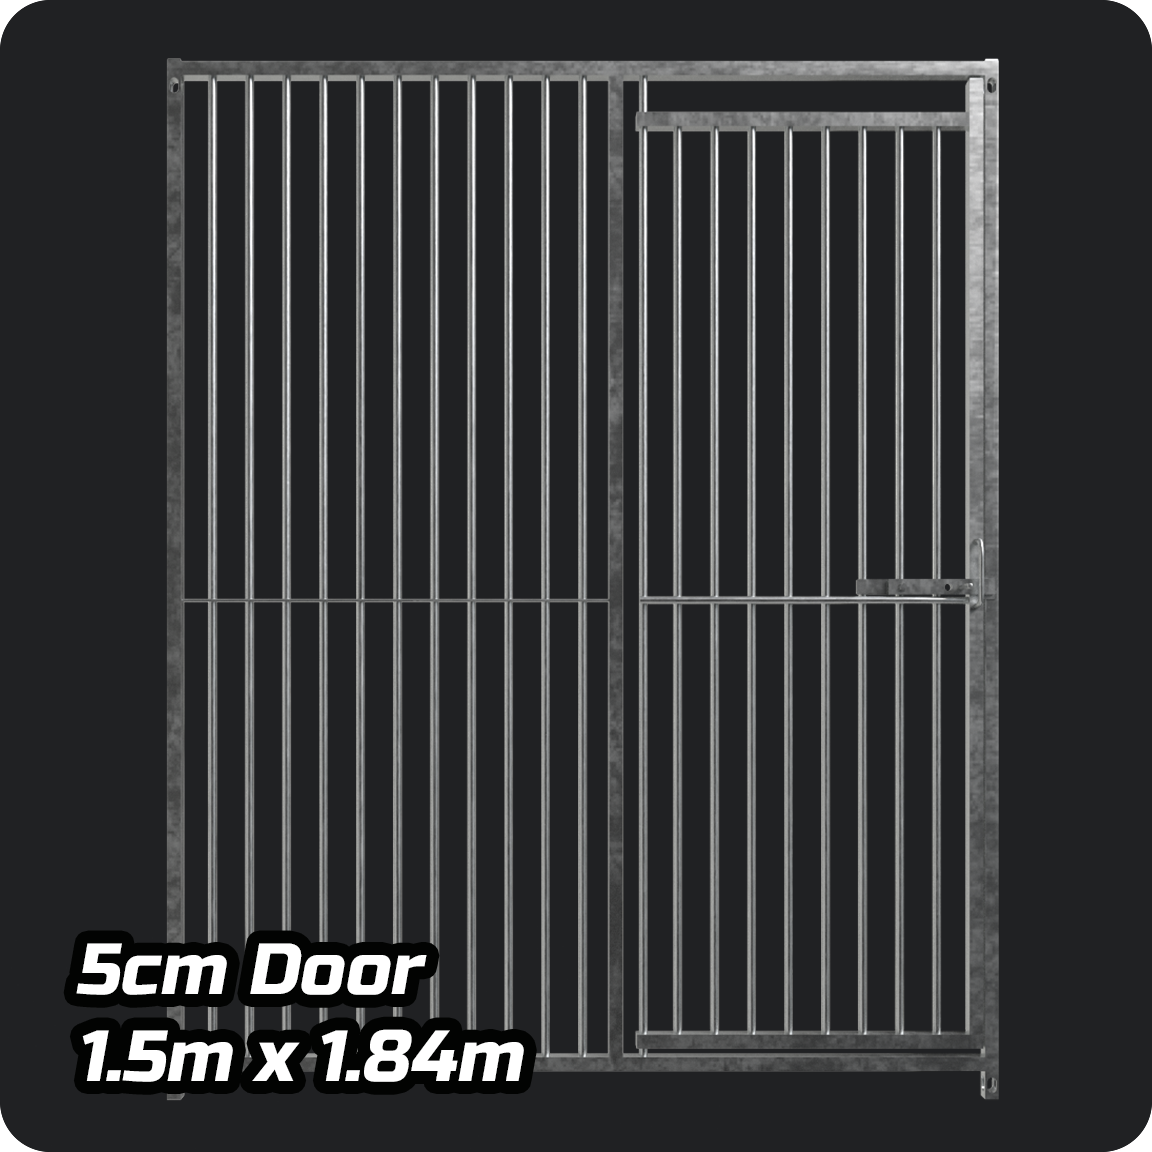 1.5m x 1.84m DOOR - Heavy duty Premium Galvanized - 5cm Gap Panels